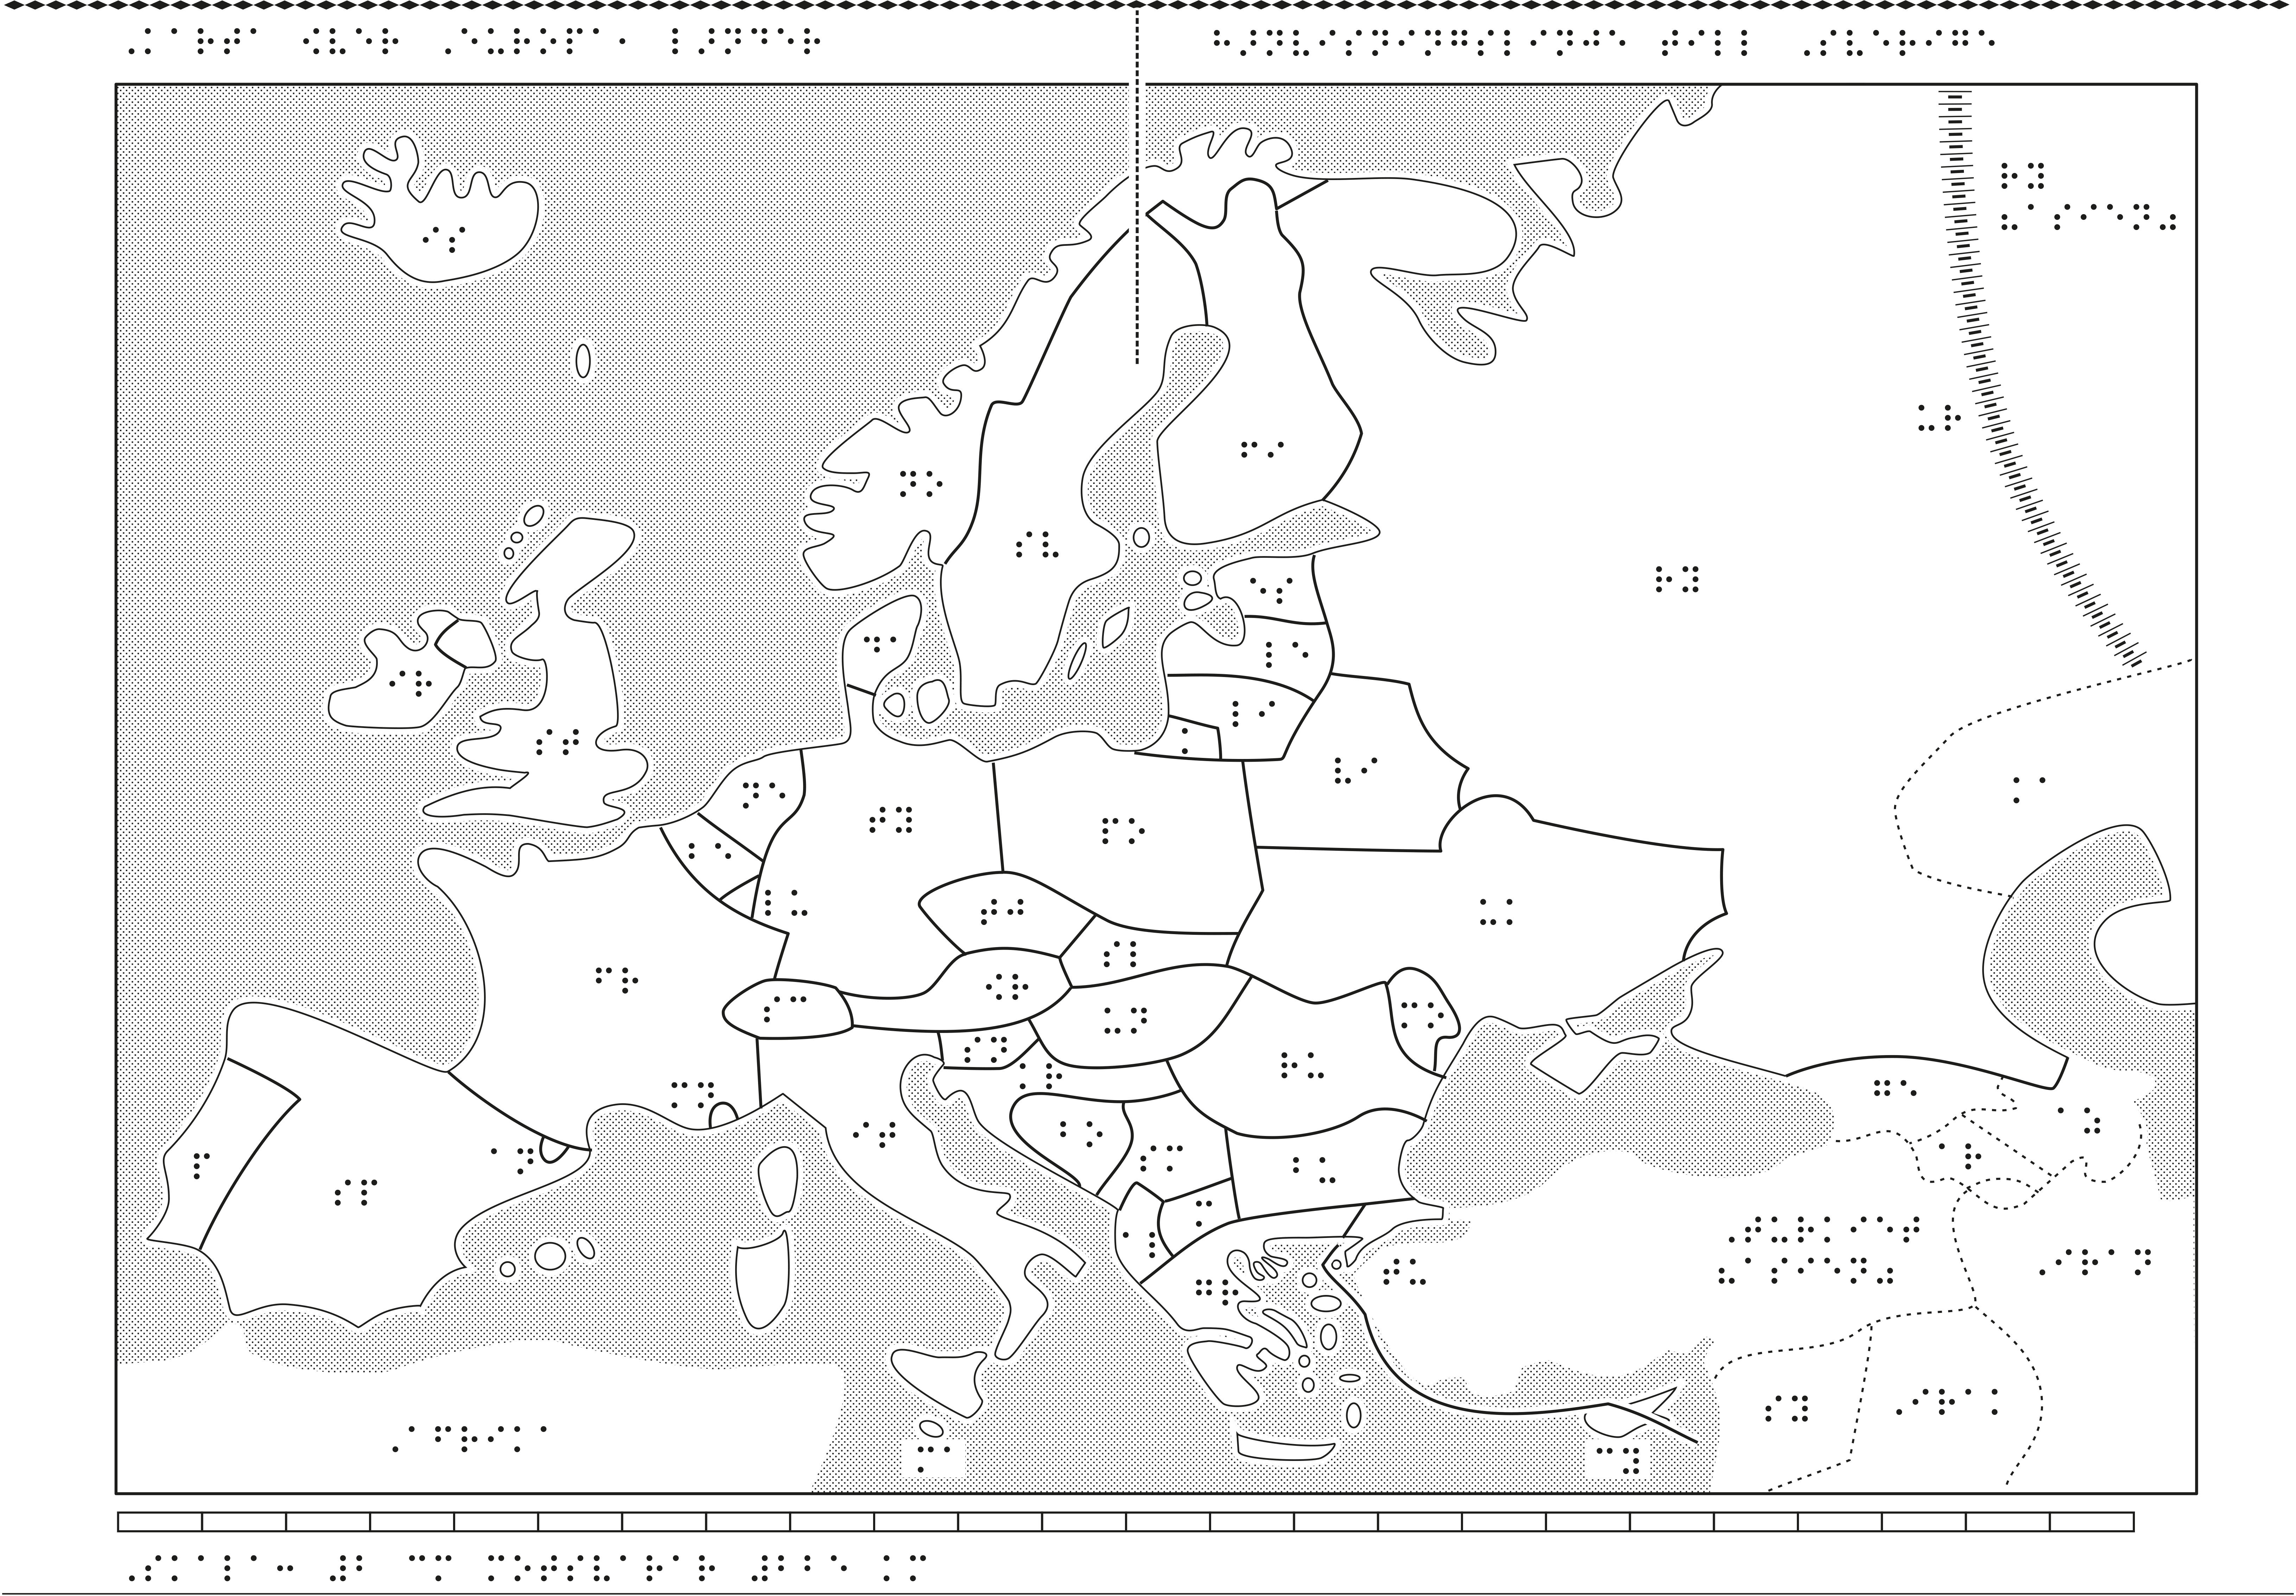 Europakarta i relief.